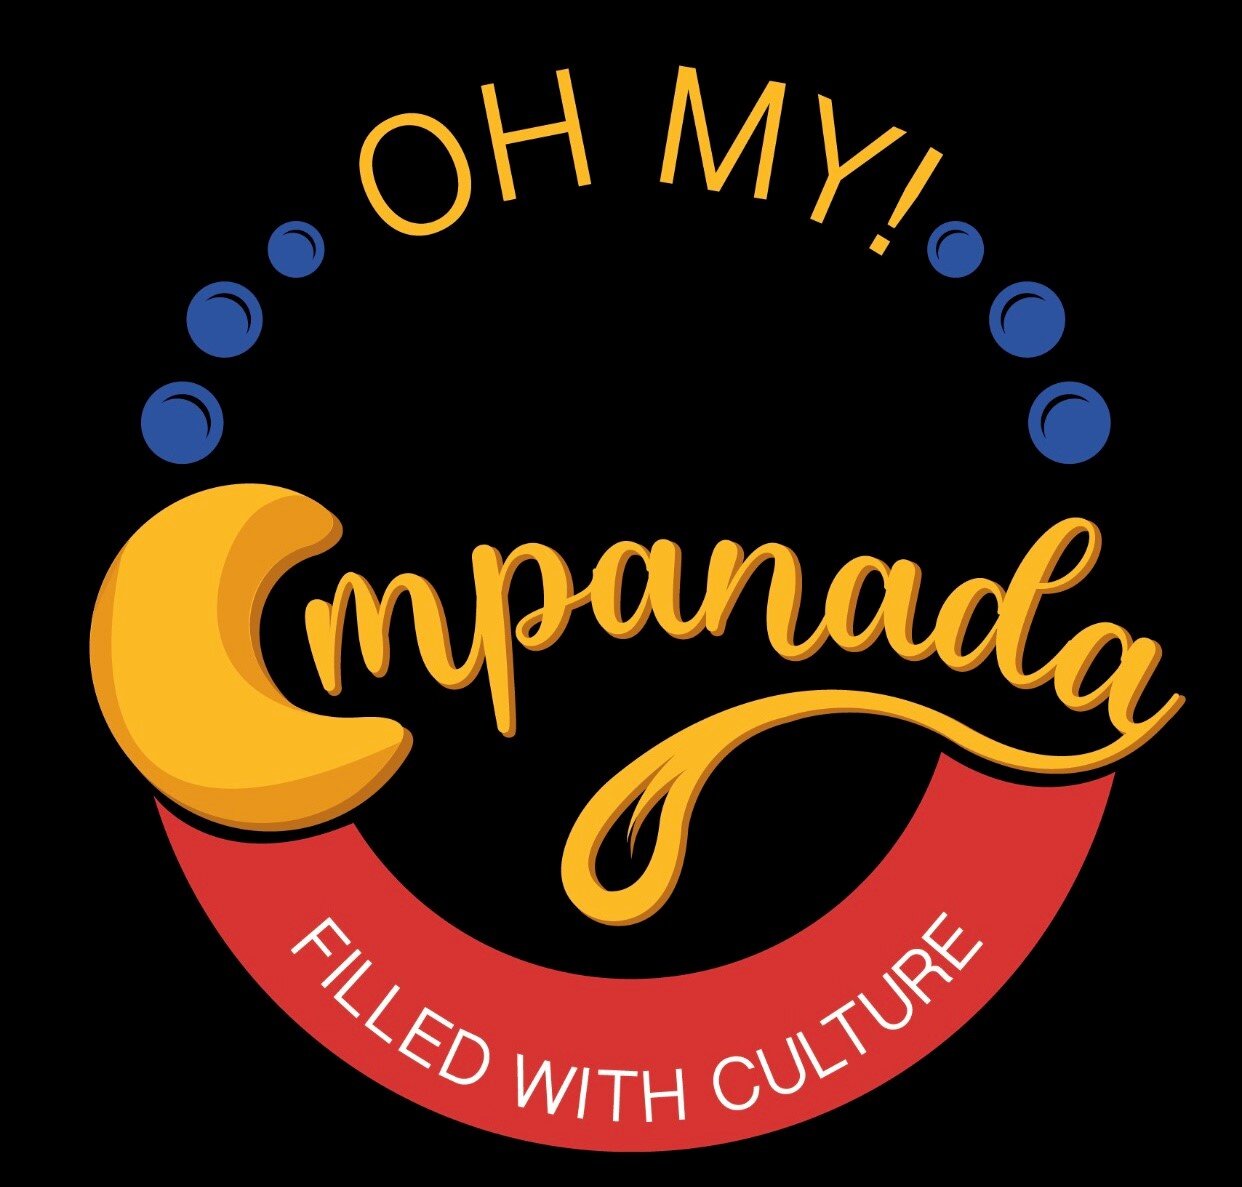 Oh My! Empanada